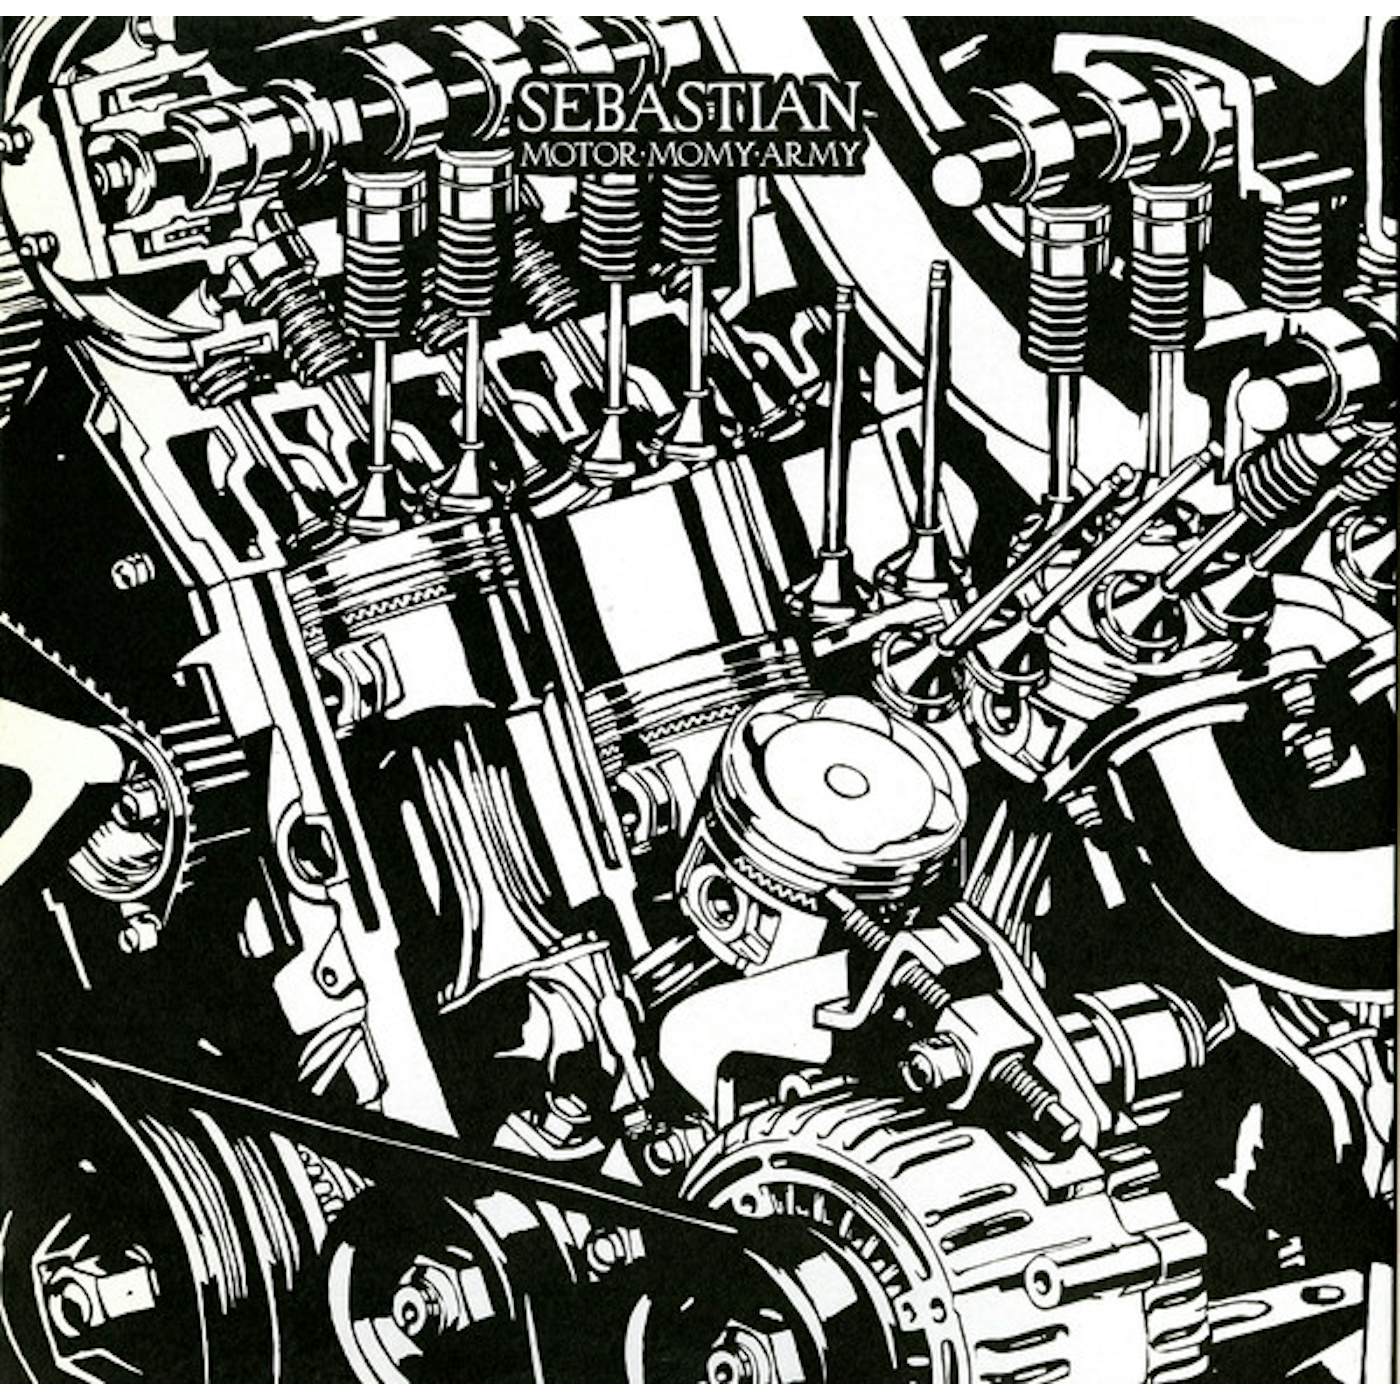 SebastiAn MOTOR MOMY ARMY Vinyl Record